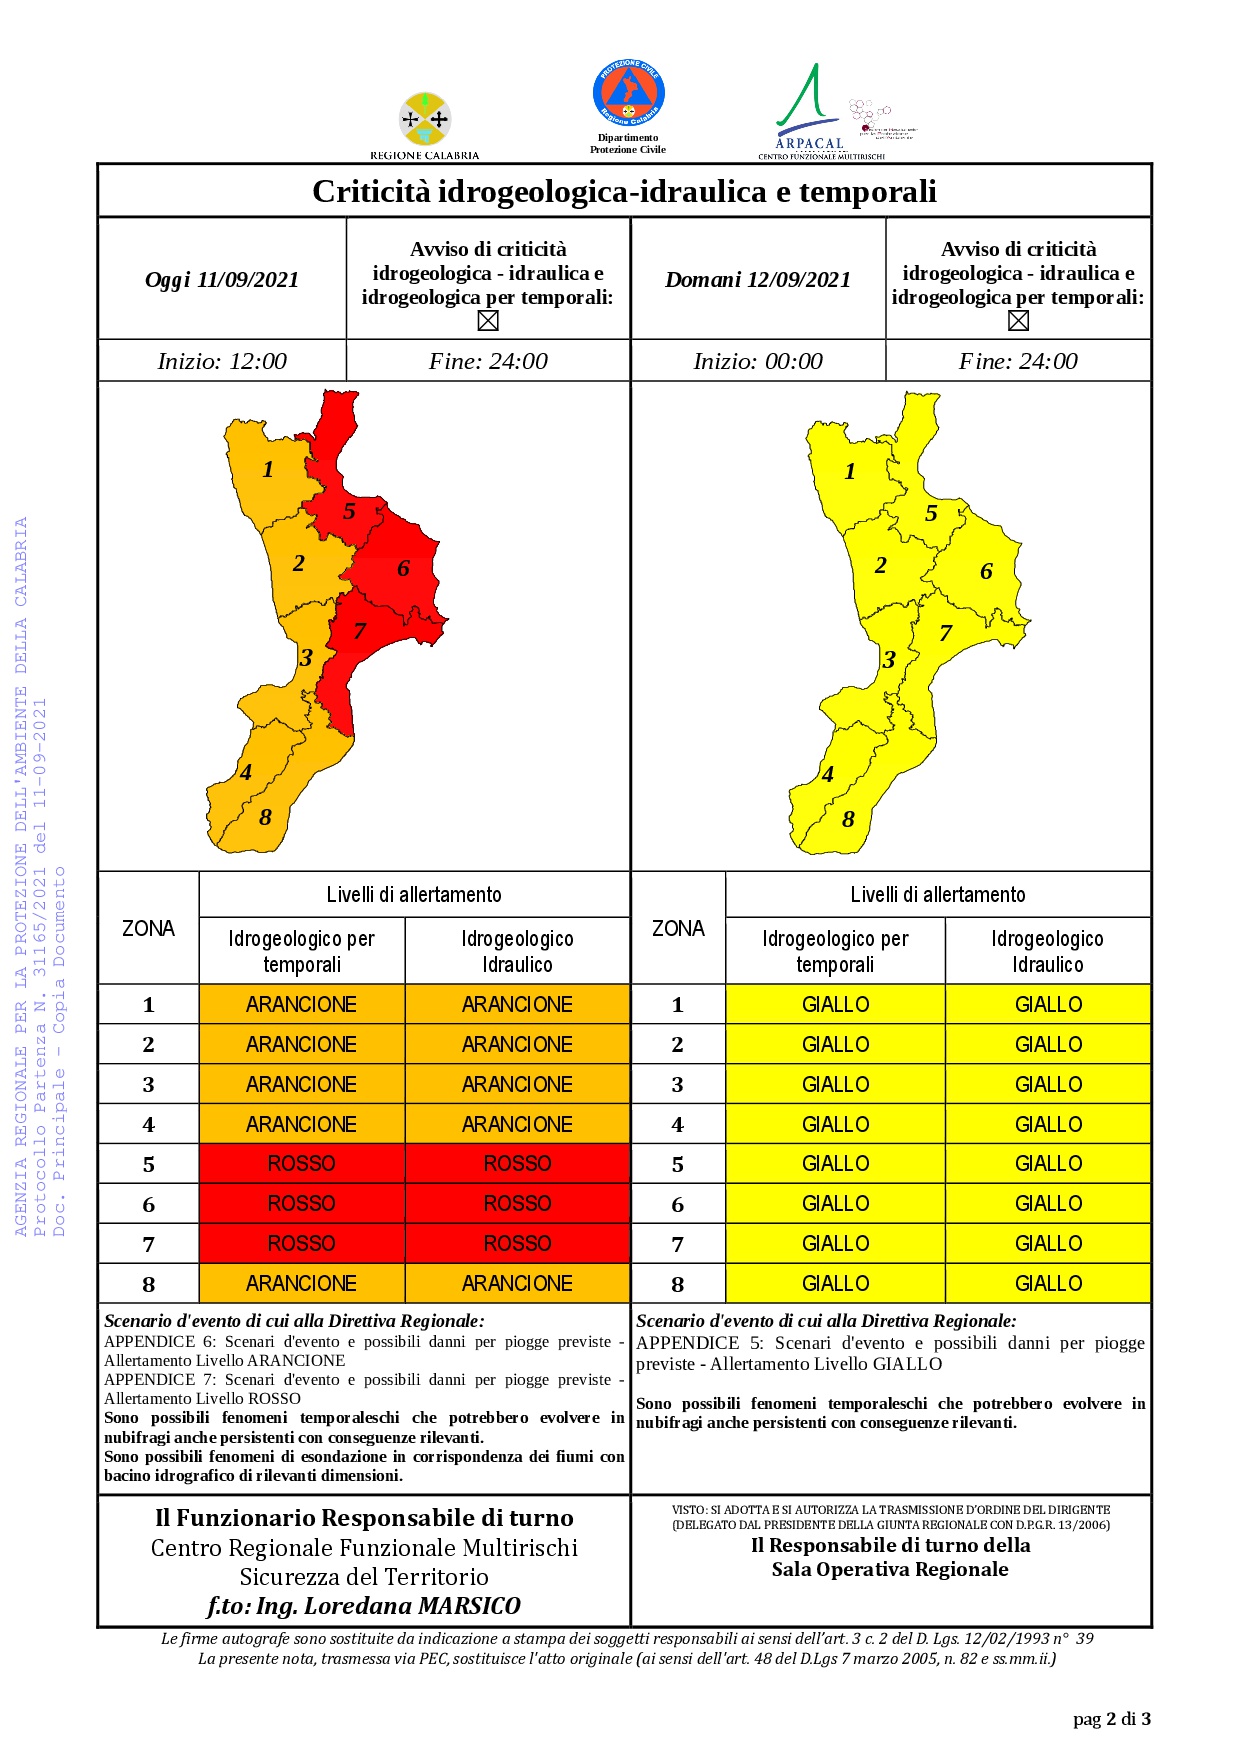 Criticità idrogeologica-idraulica e temporali in Calabria 11-09-2021